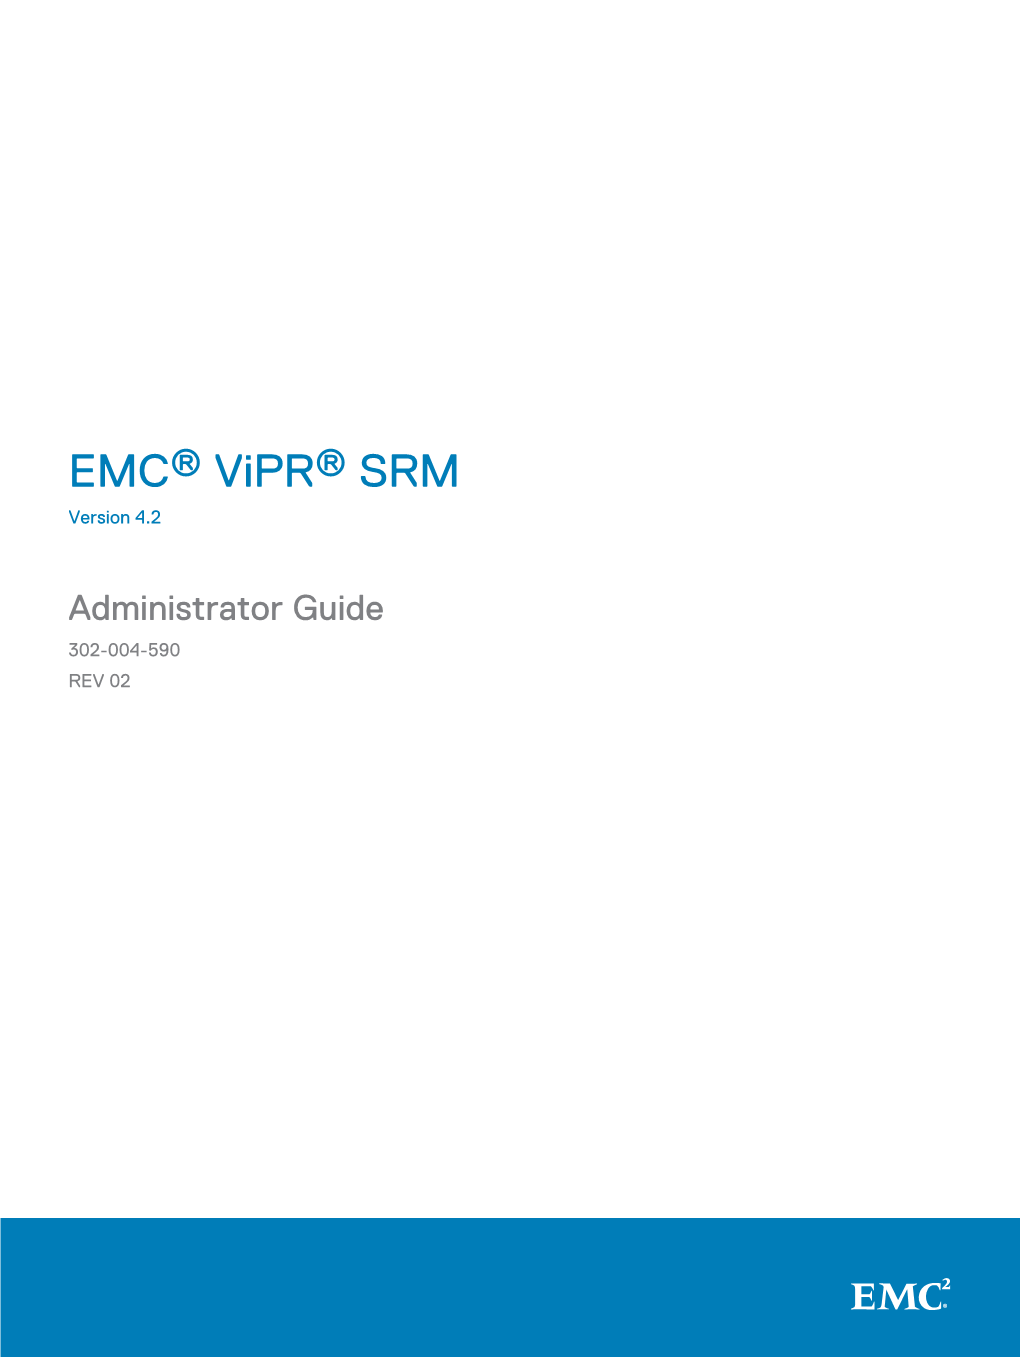 EMC® Vipr® SRM Version 4.2